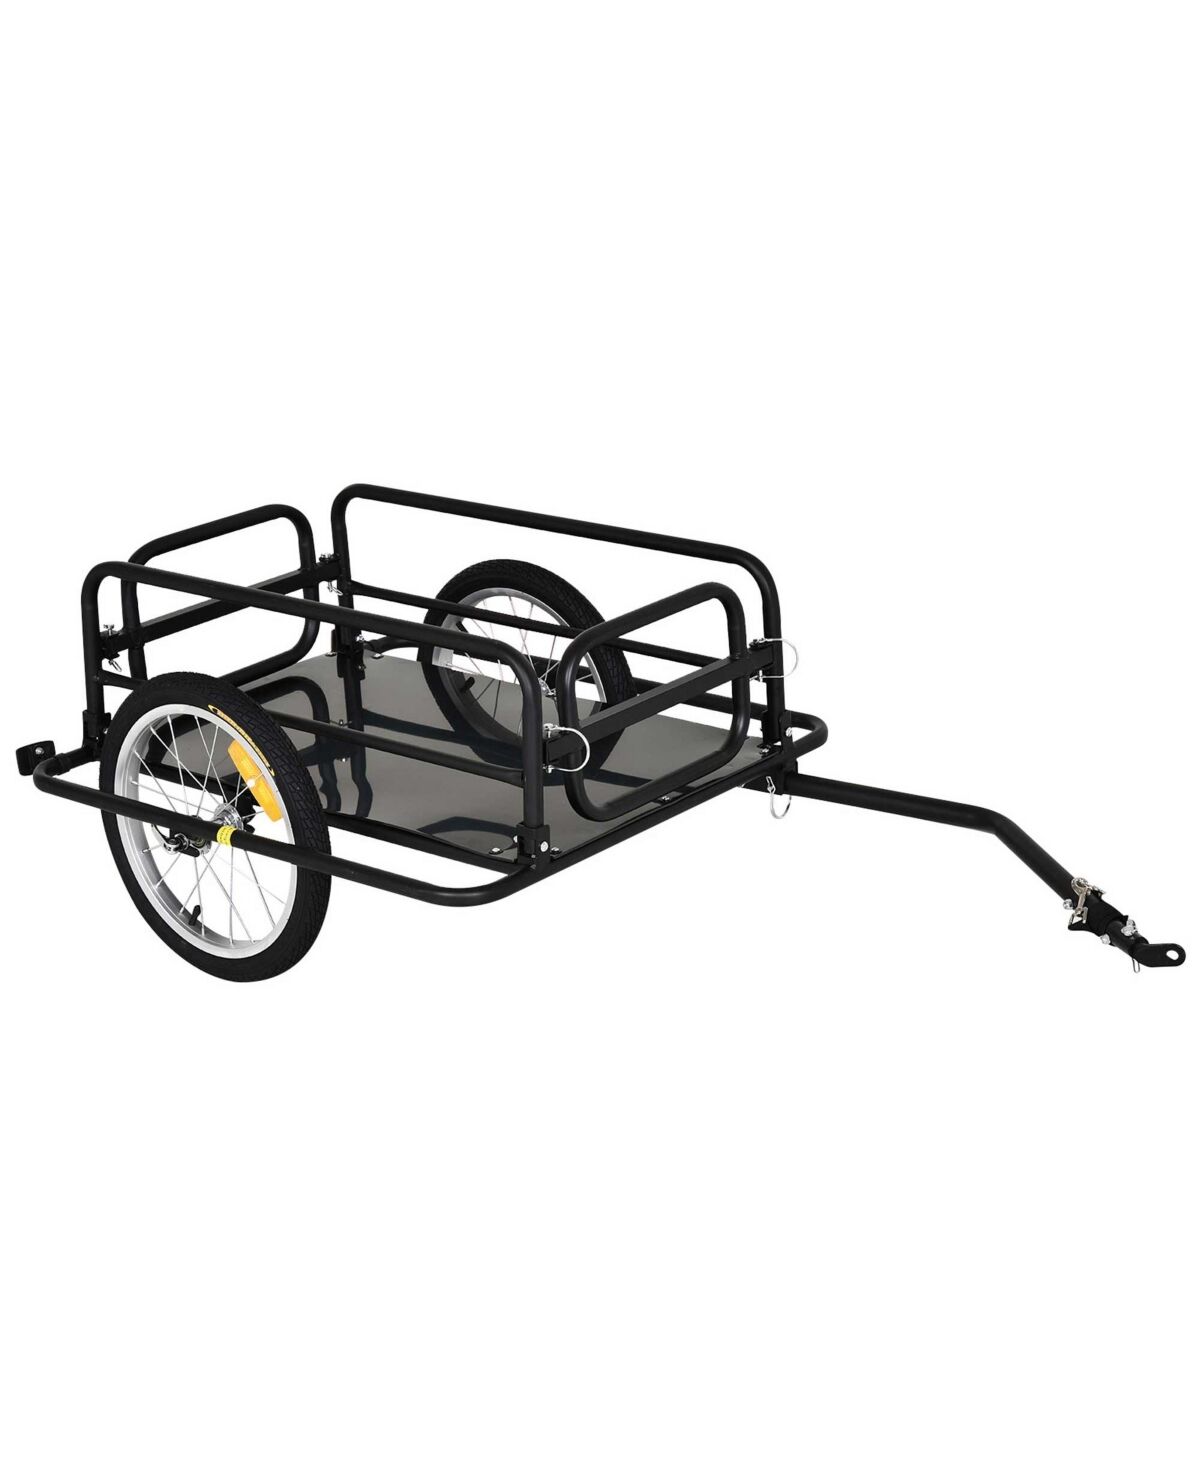 Aosom Bike Cargo Trailer Bicycle Cart Wagon Trailer w/ Hitch, 16'' Wheels, 88 lbs Max Load - Black - Black